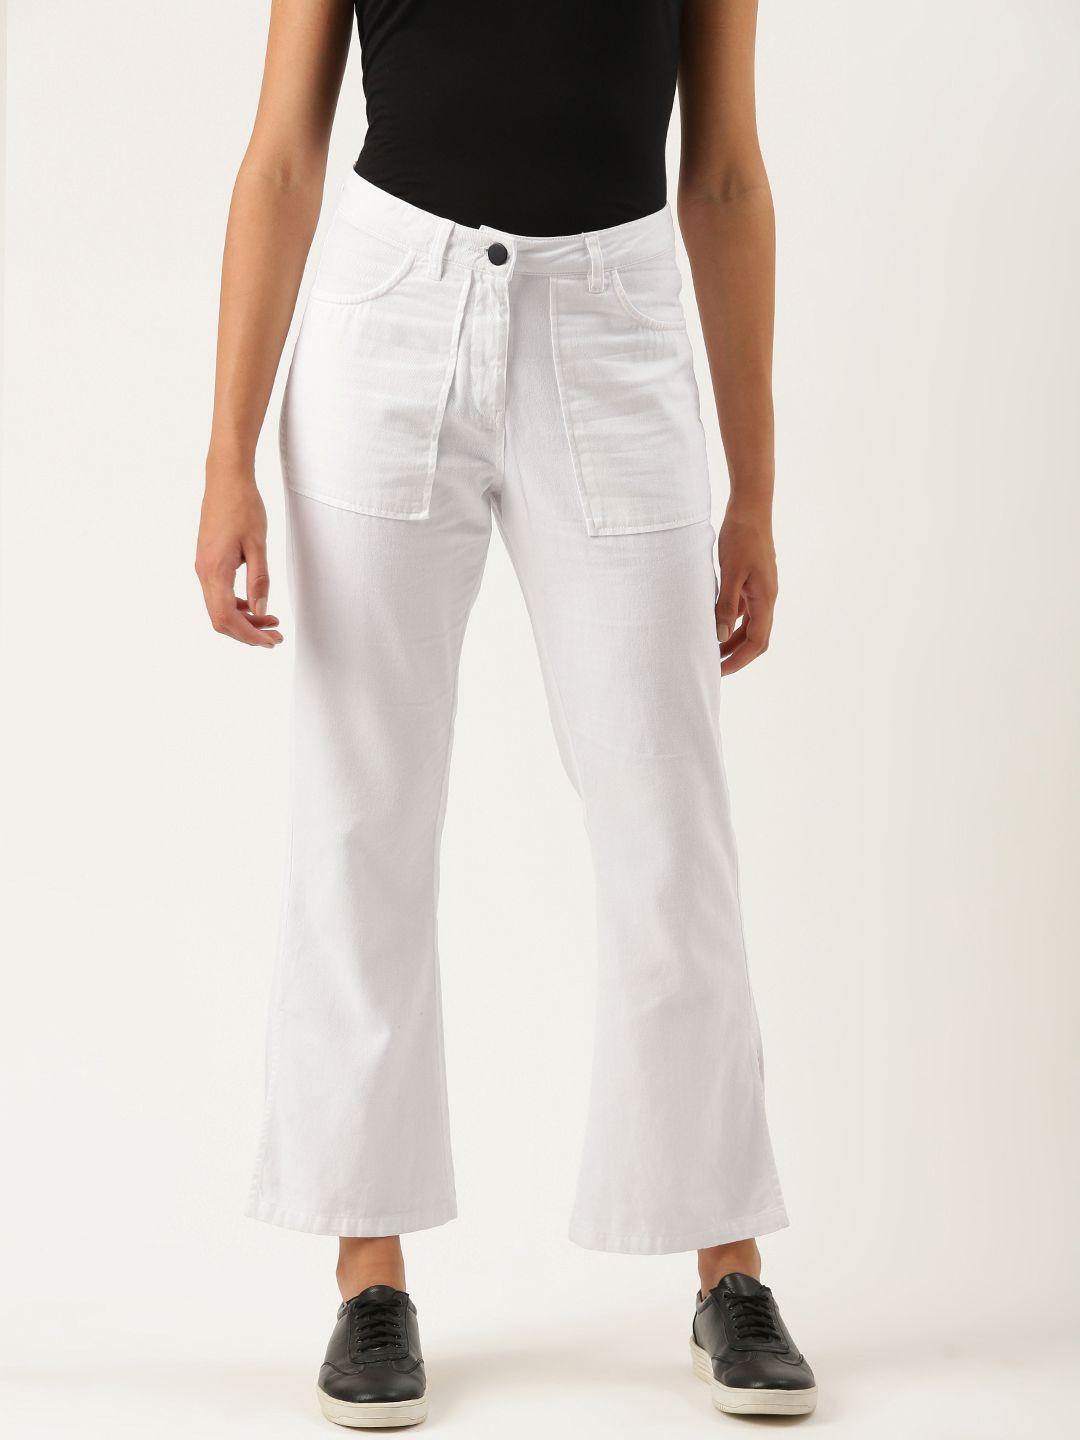 ivoc women white solid pure cotton mid-rise slim fit jeans